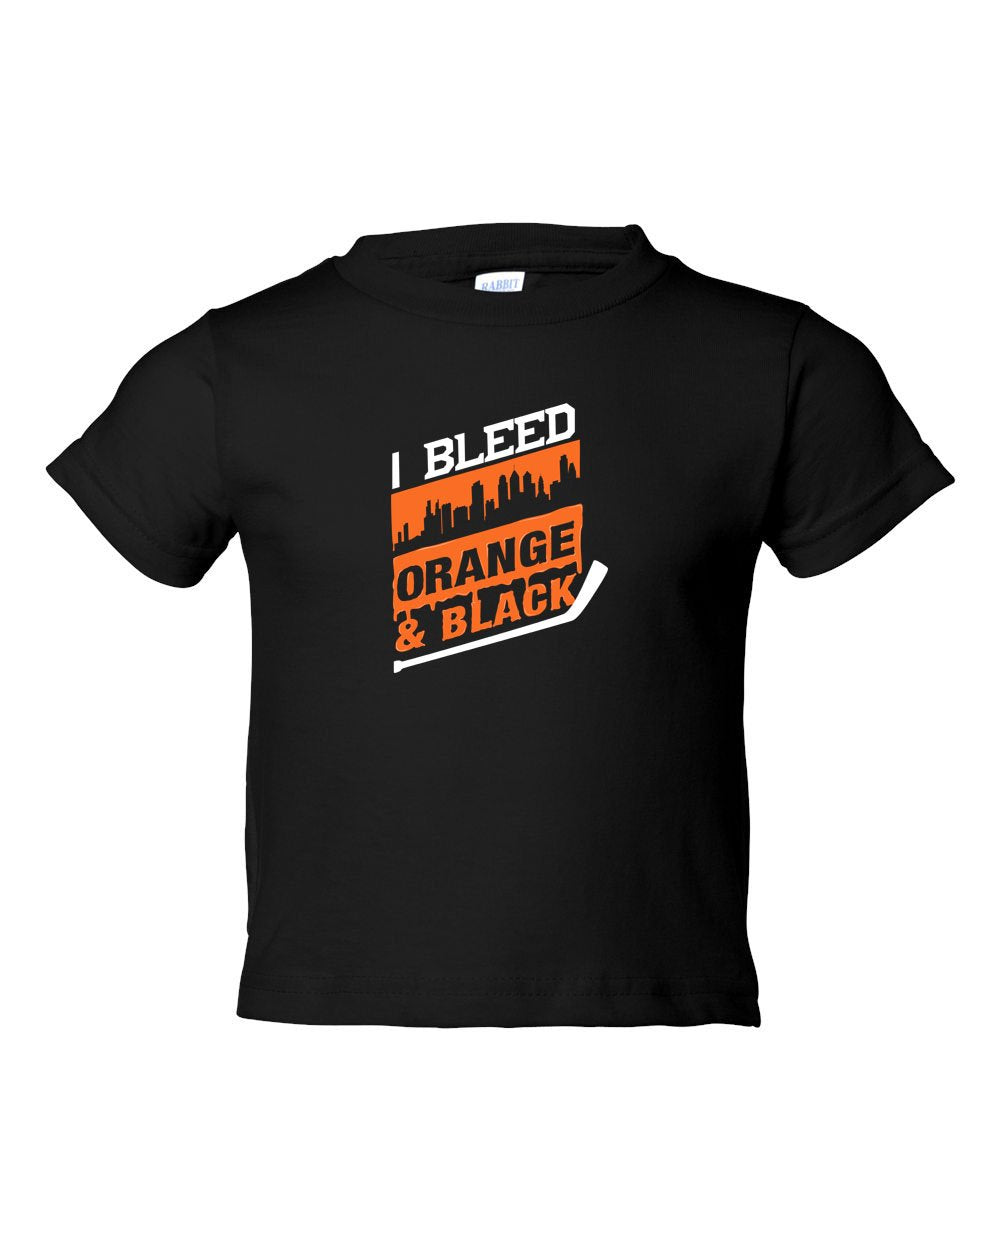 I Bleed Orange and Black TODDLER T-Shirt